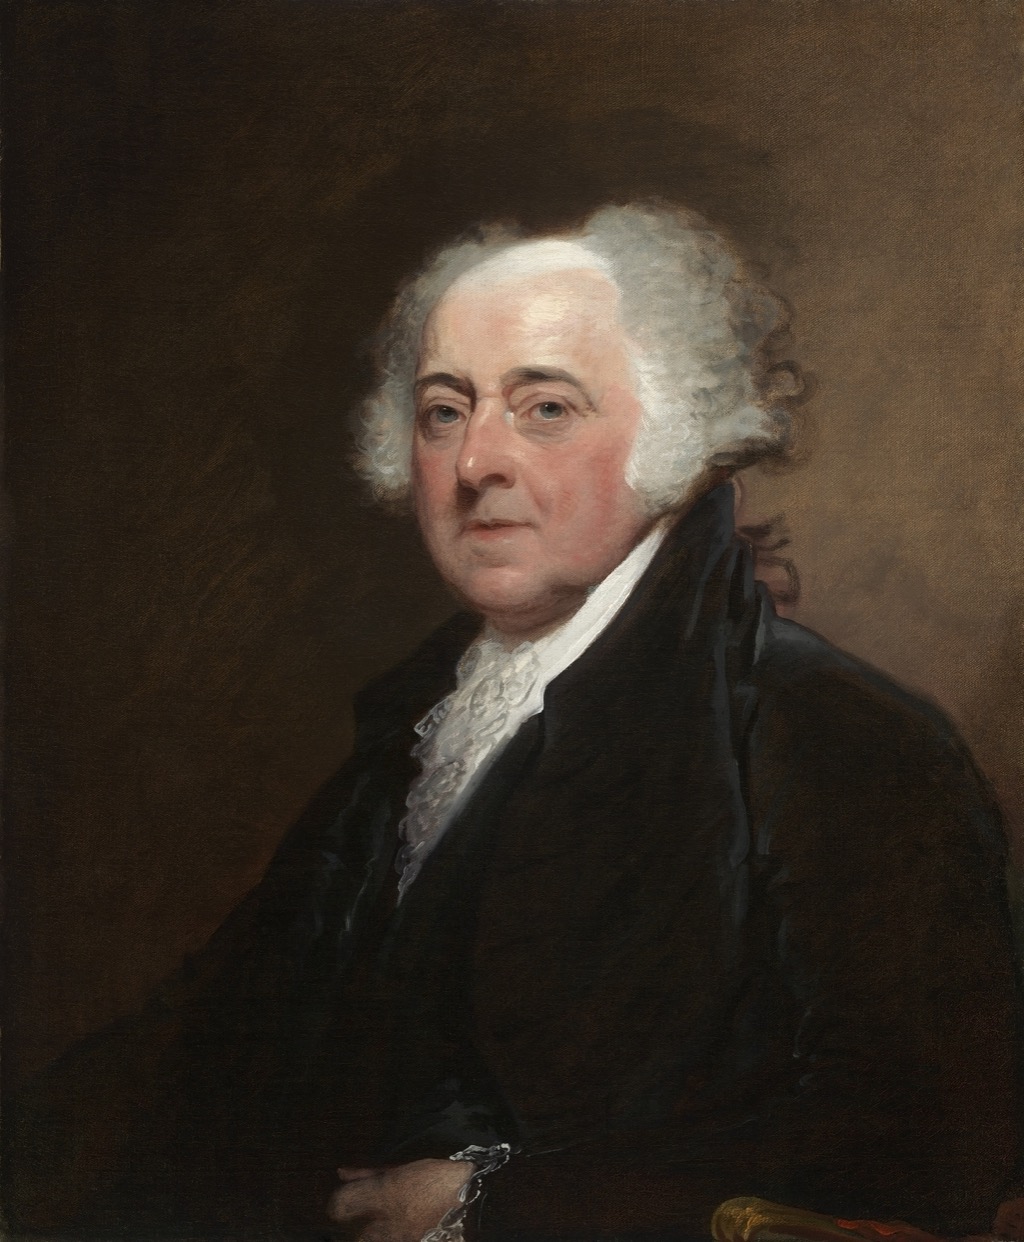 President John Adams historical facts